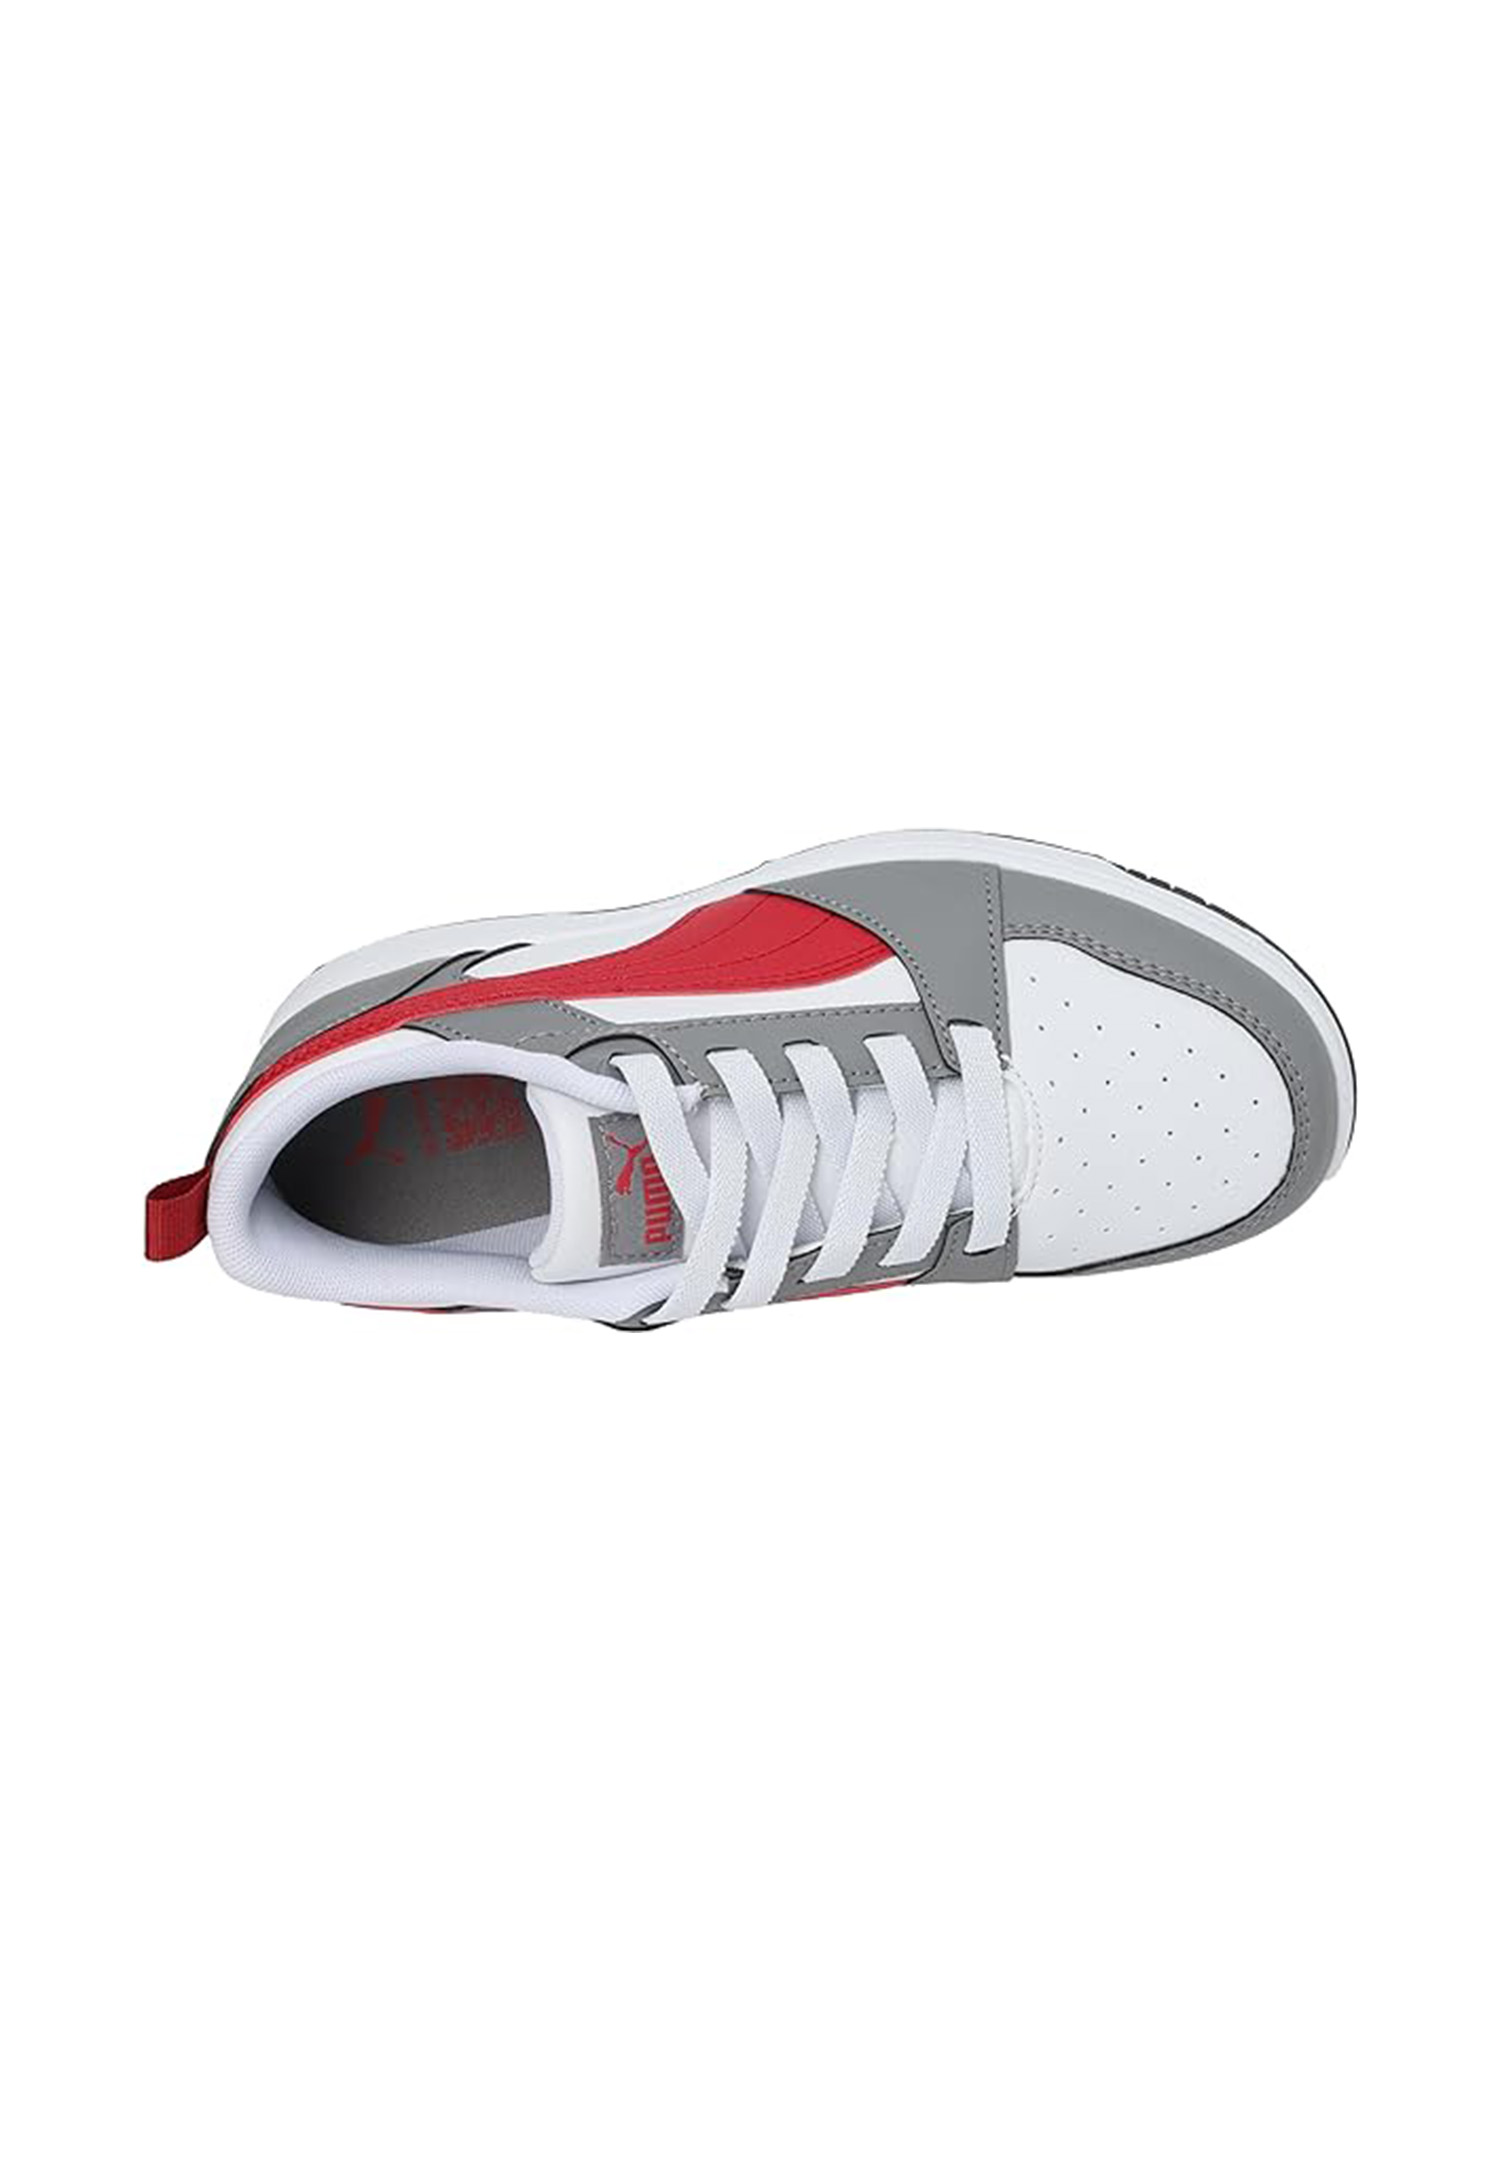 Puma Rebound V6 Lo AC PS Unisex Kinder Sneaker 396742 09 weiß/grau/rot 